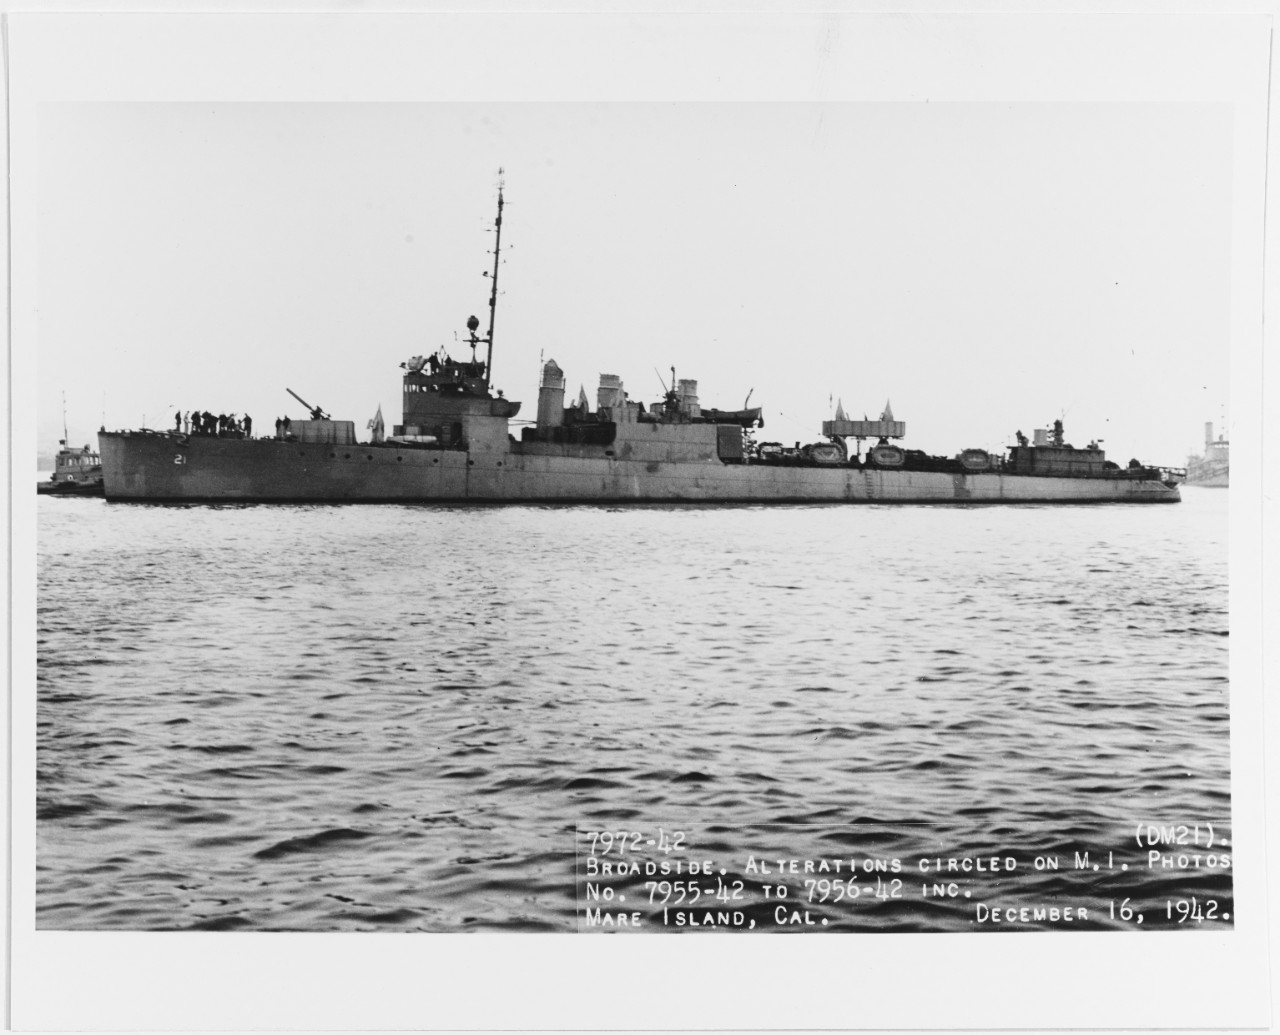 USS SICARD (DM-21)